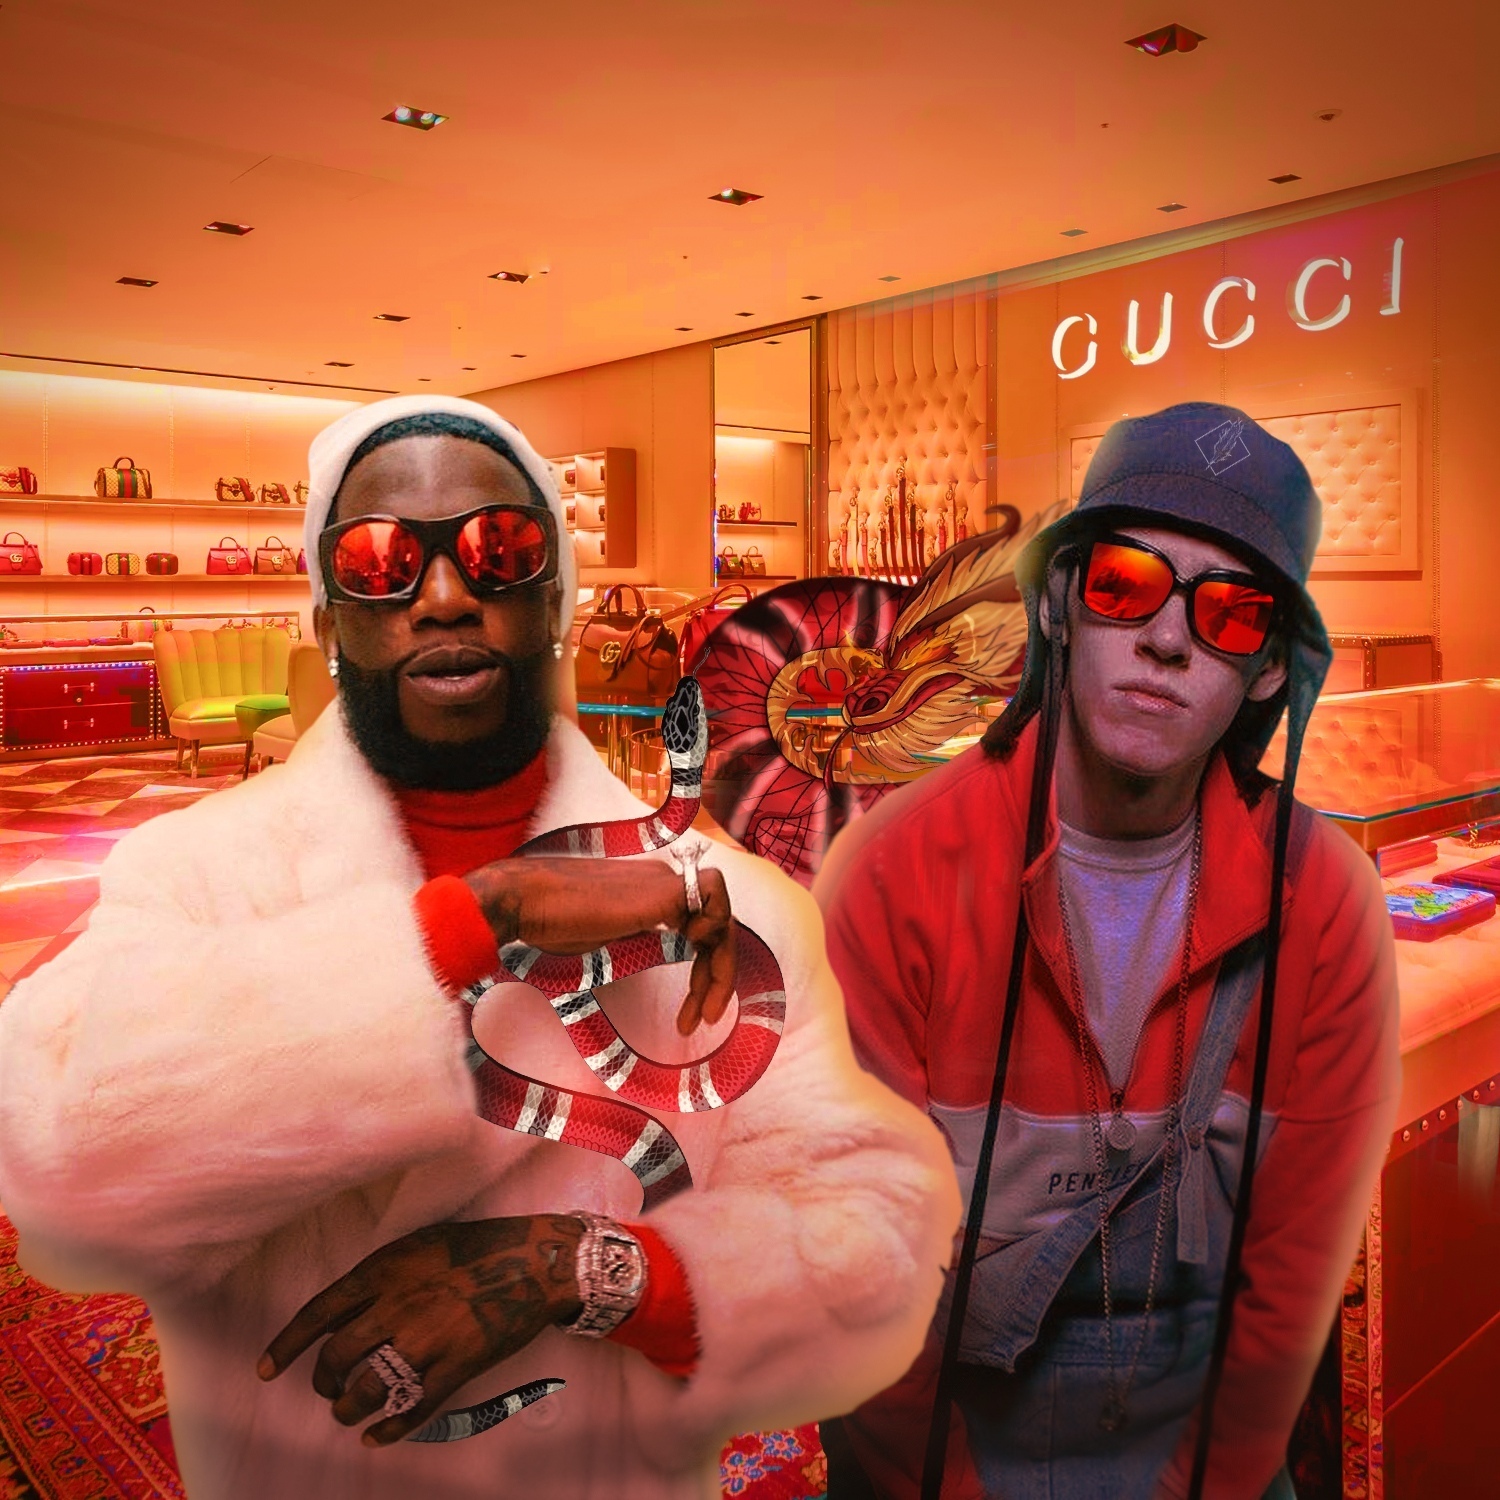 Gucci mane kitchen official music pics